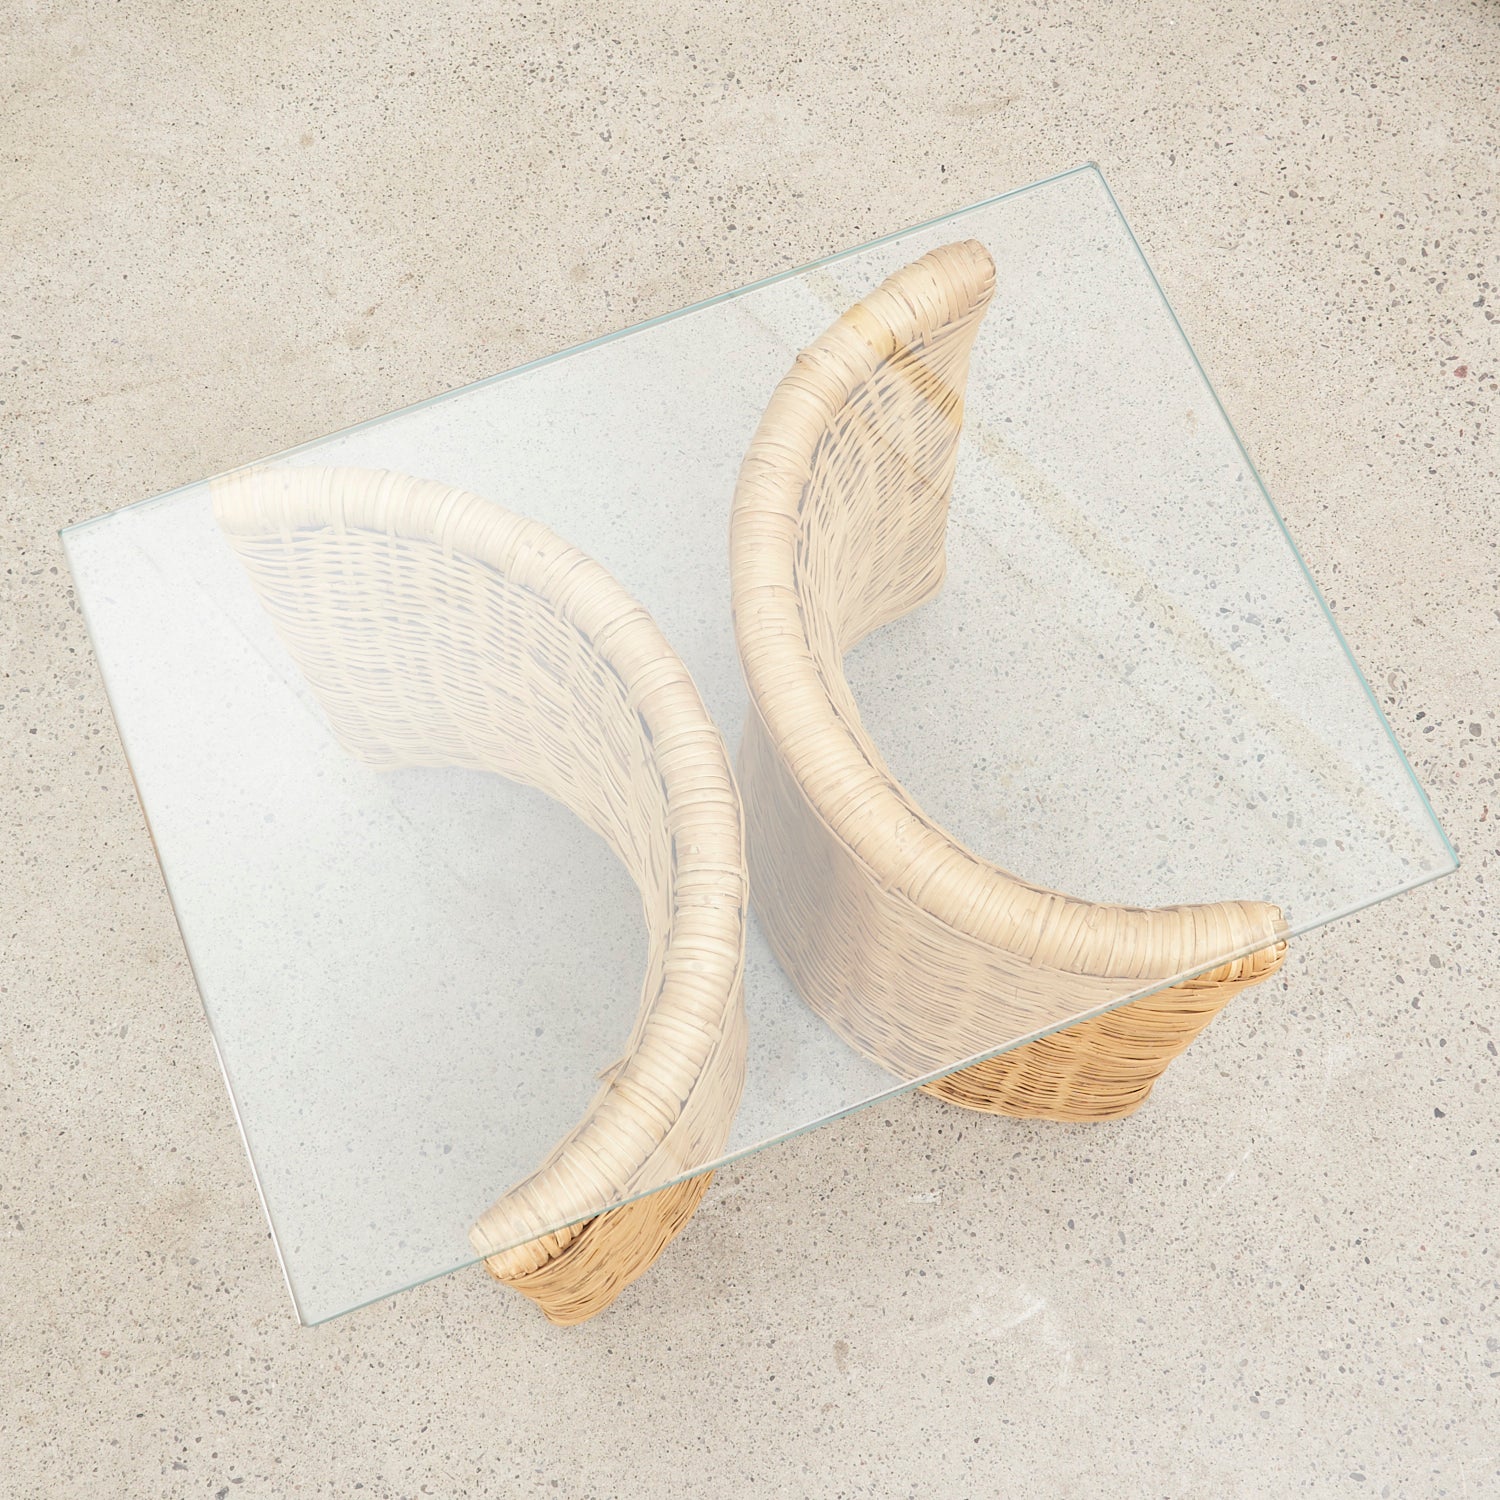 Glass & Rattan Side Table